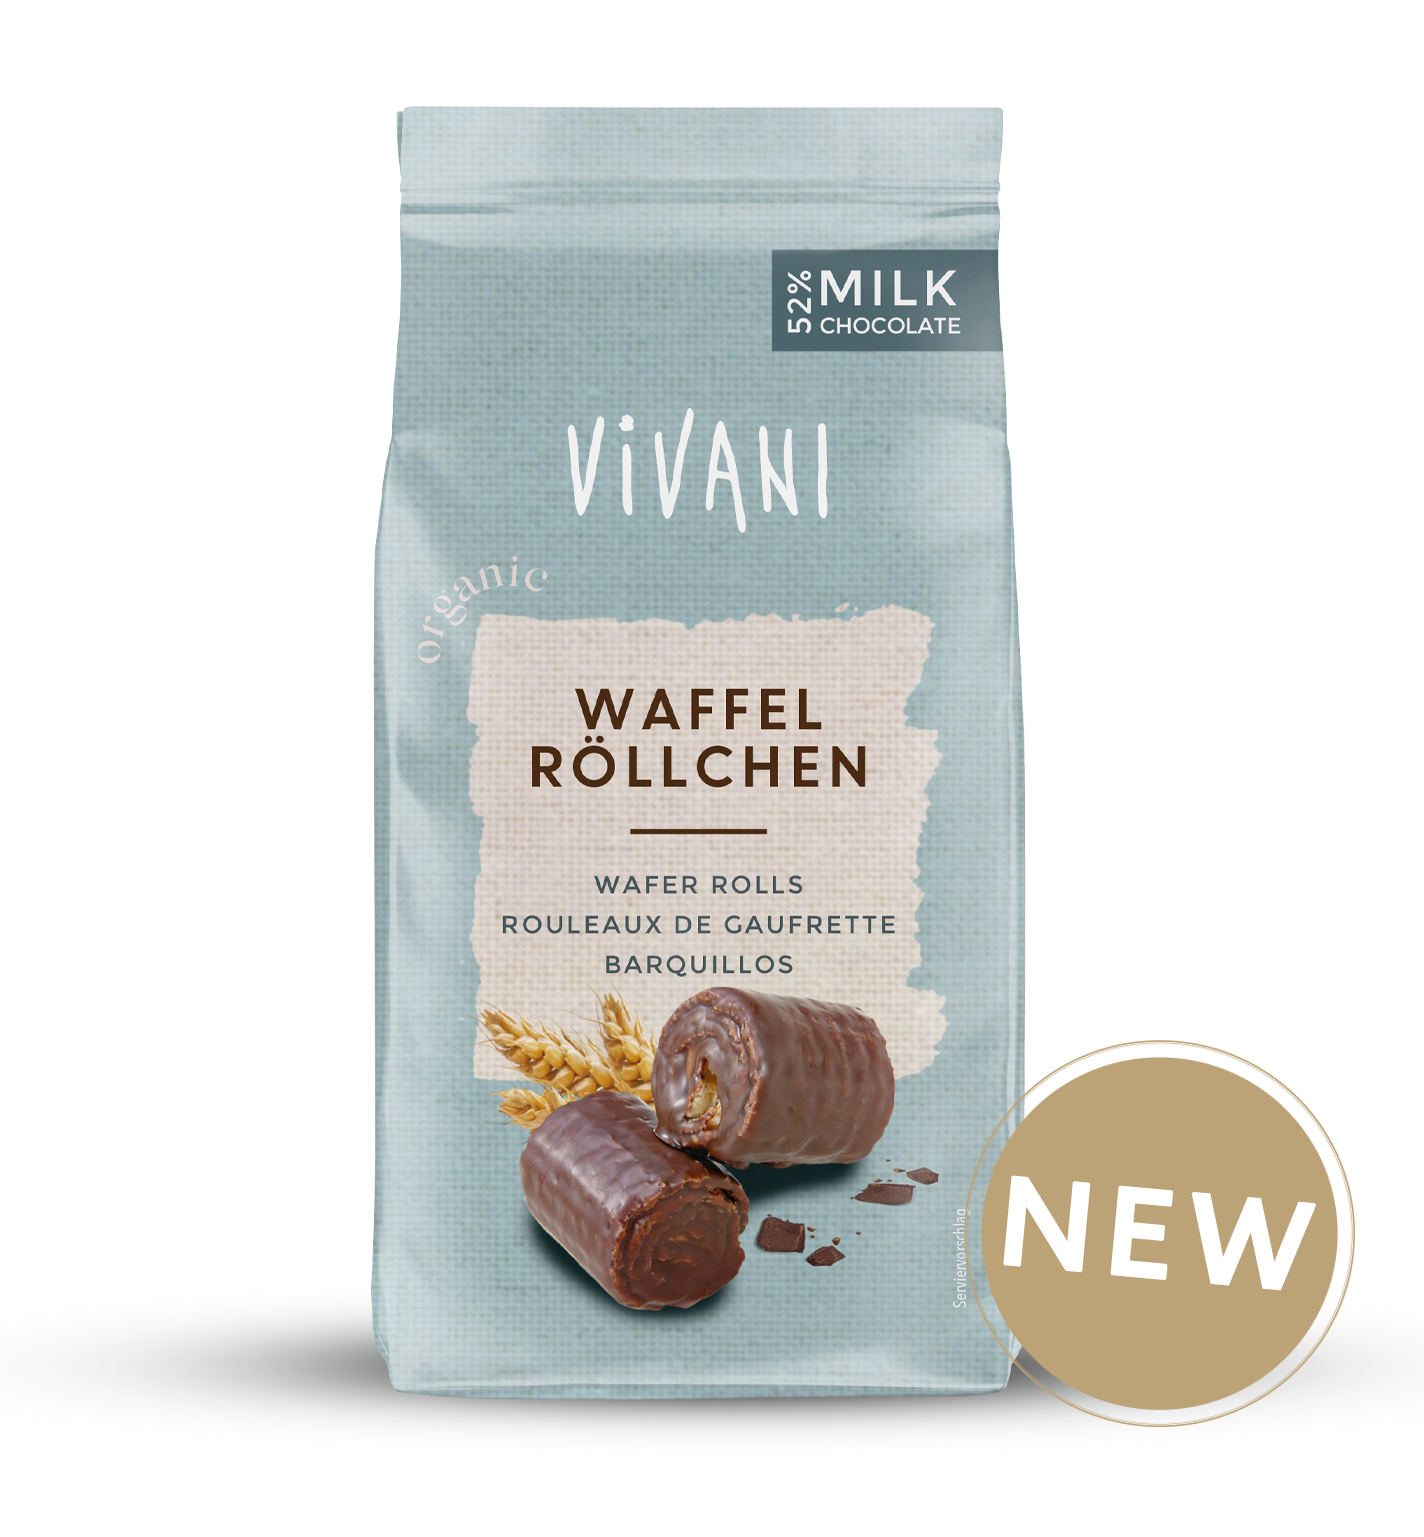 Wafer Rolls with 52% milk chocolate from VIVANI Organic Chocolate